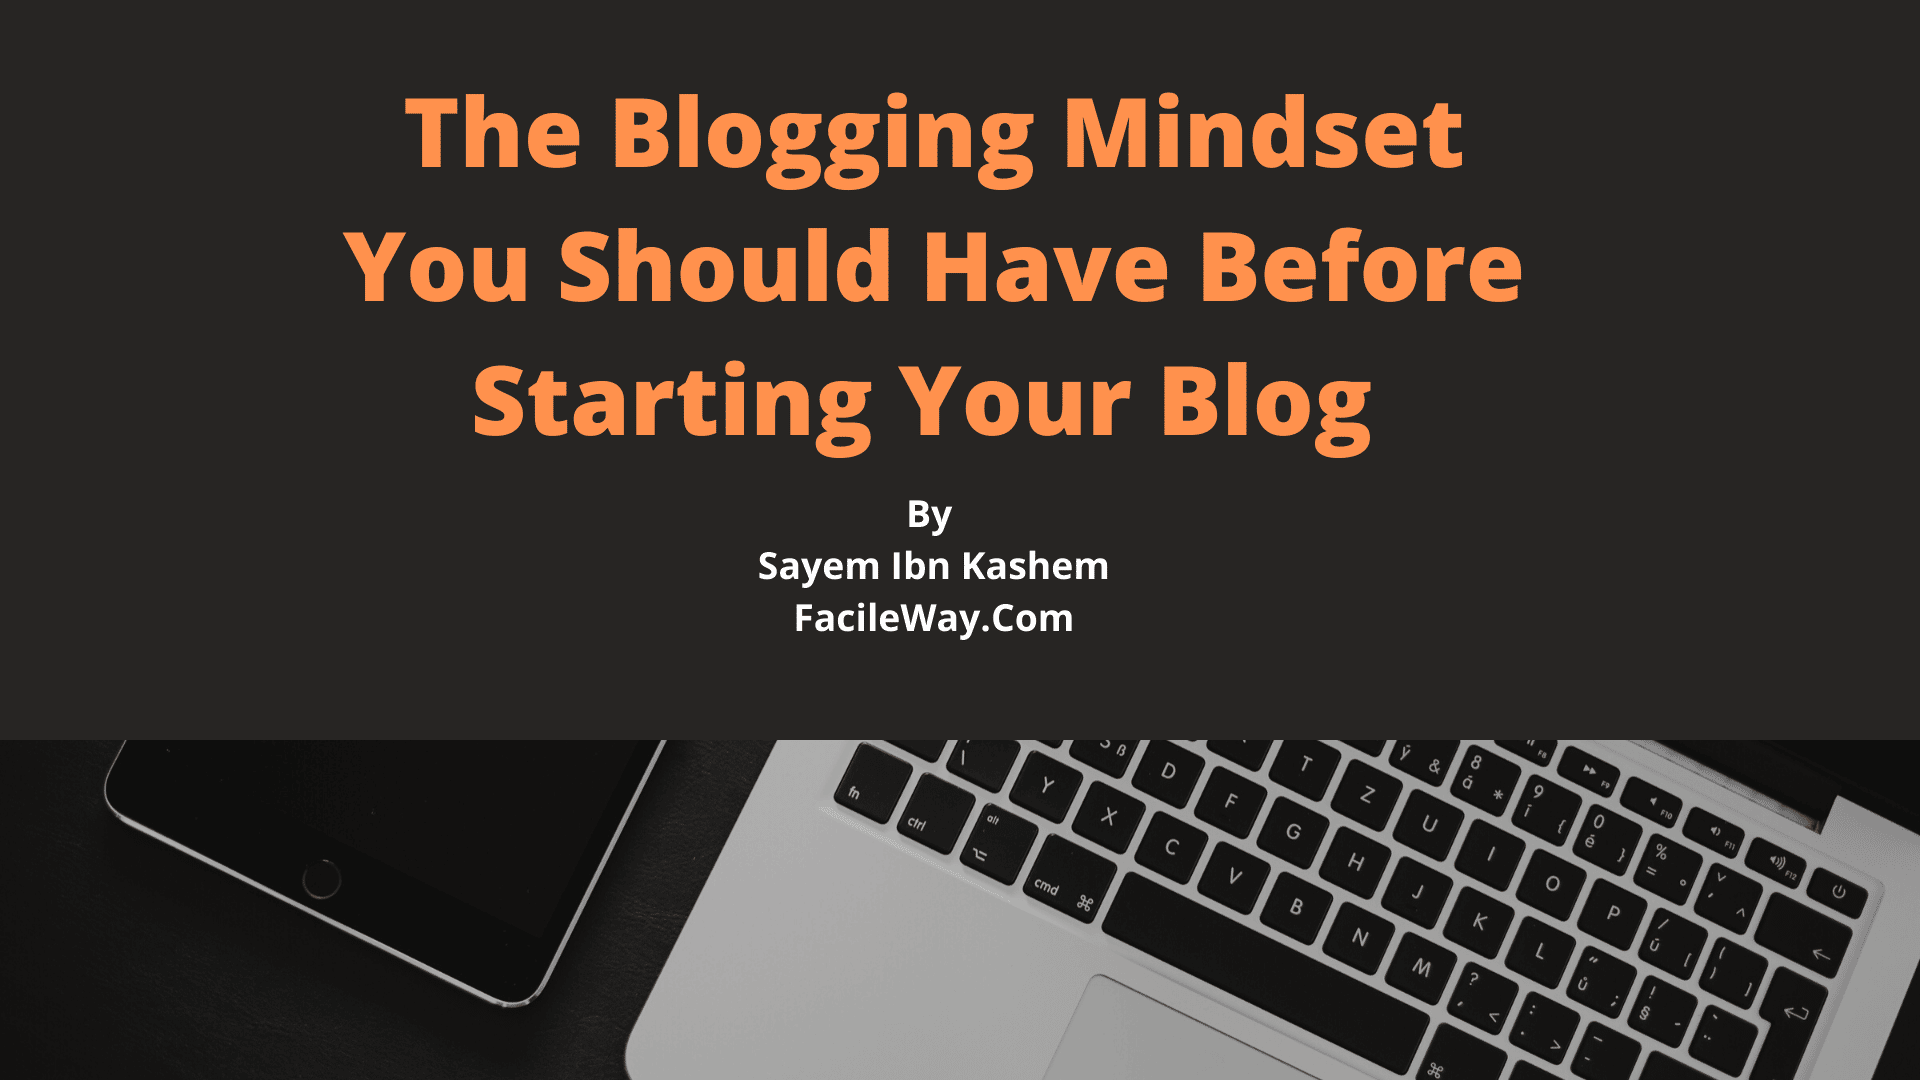 The Blogging Mindset You Should Have Before Starting Your Blog